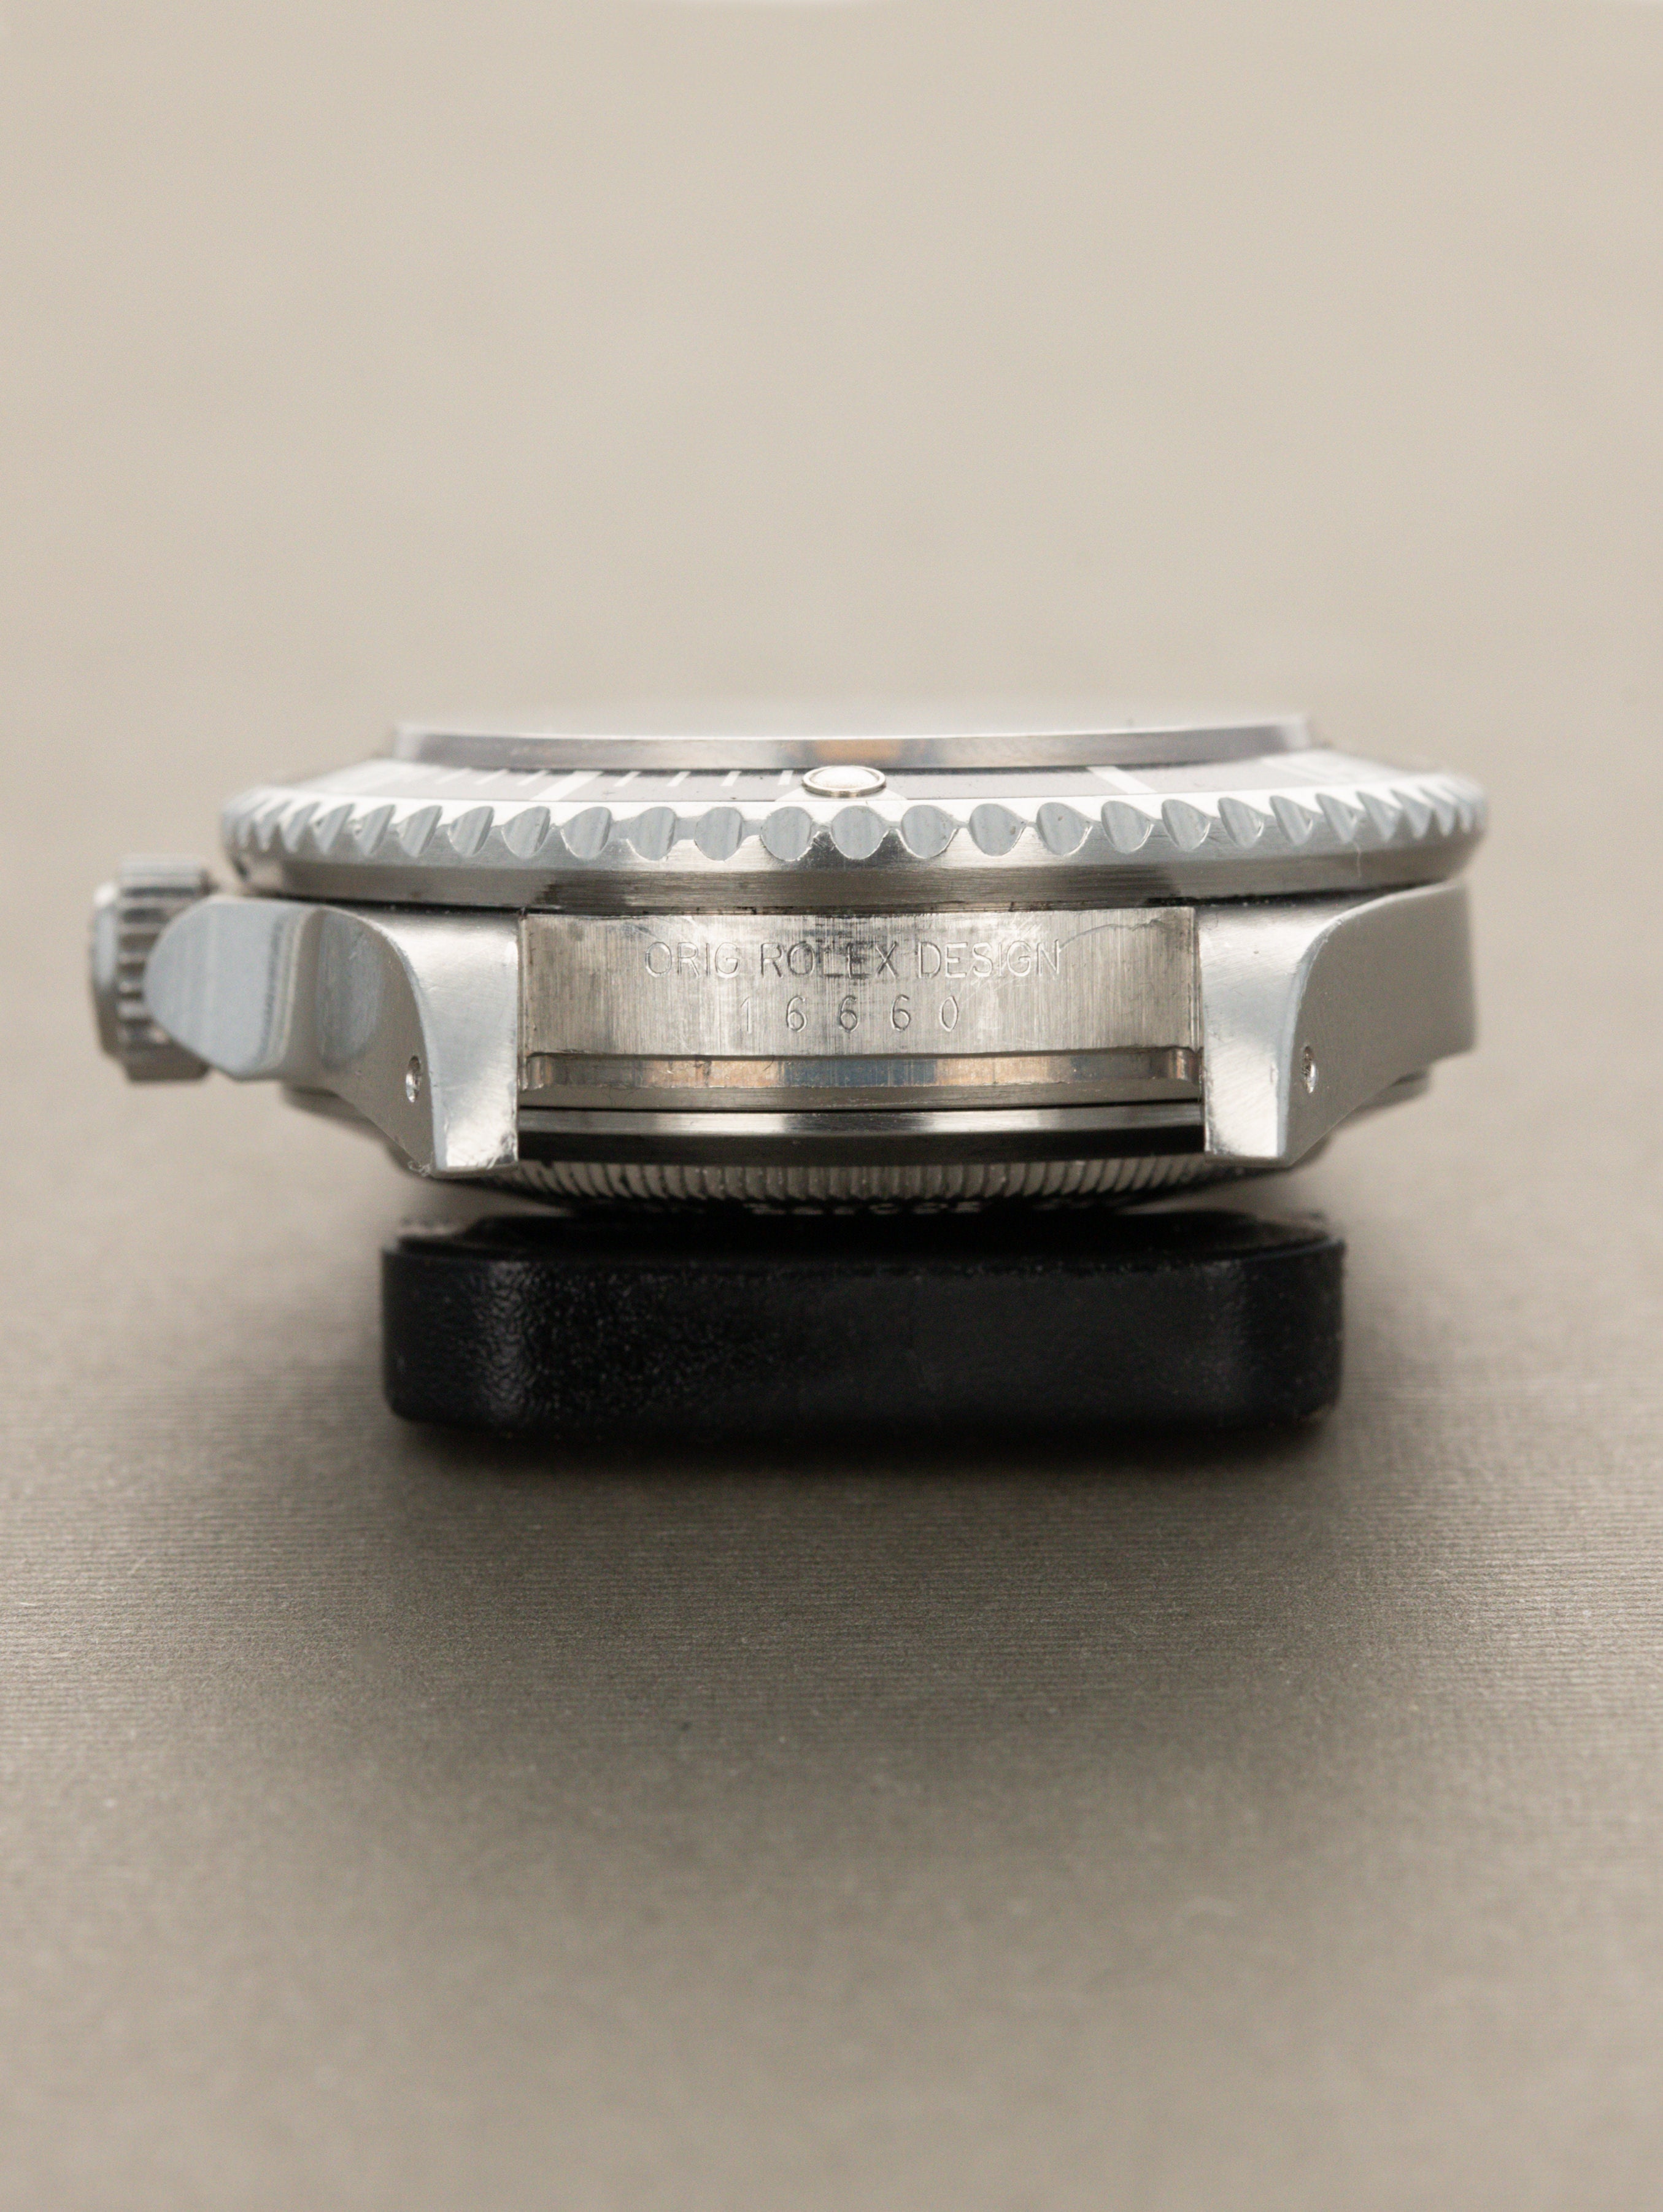 Rolex Sea-Dweller Ref. 16660 - 'Triple 6' Gloss Black Dial